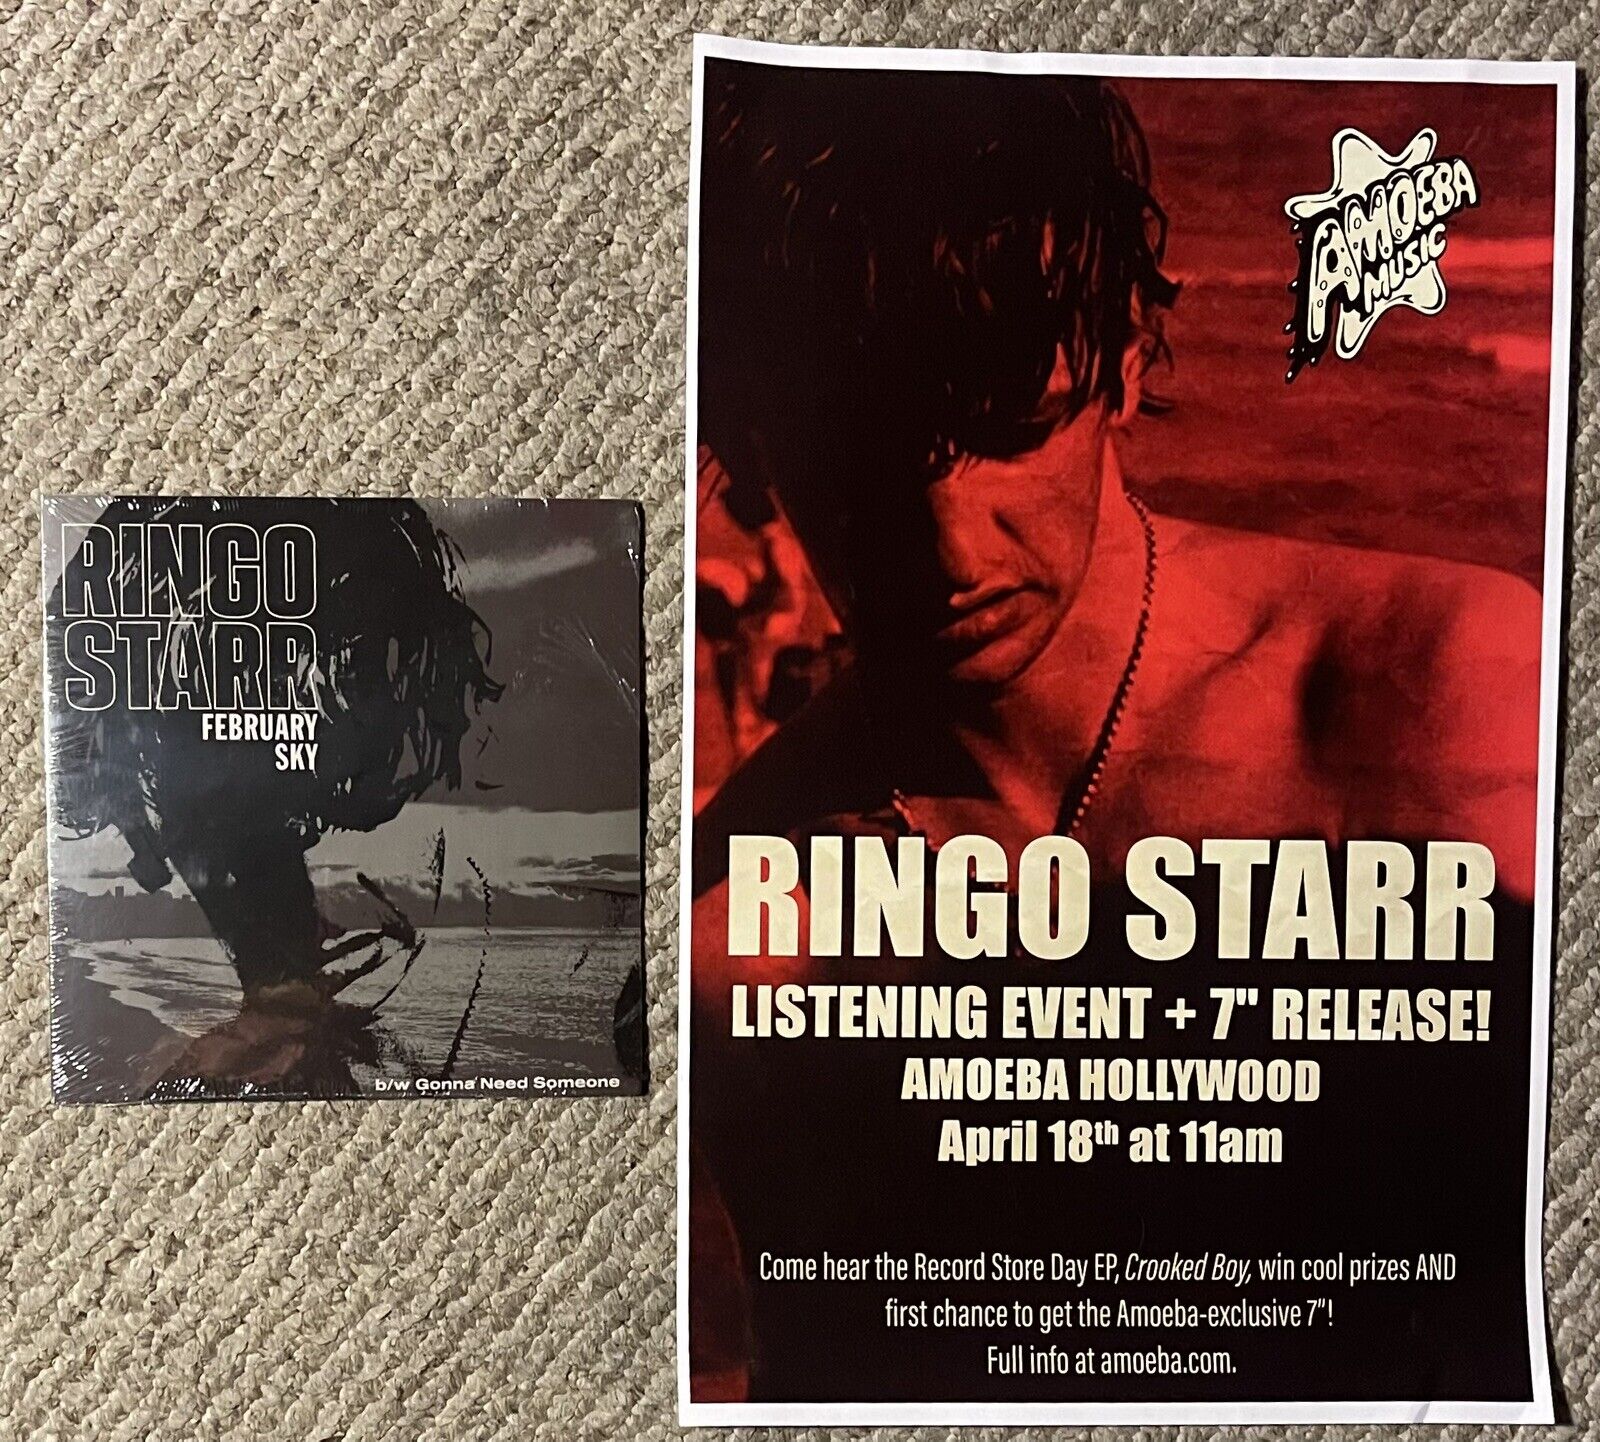 Ringo Starr RED VINYL February Sky 7 Inch Single & Event Poster Rare Amoeba RSD